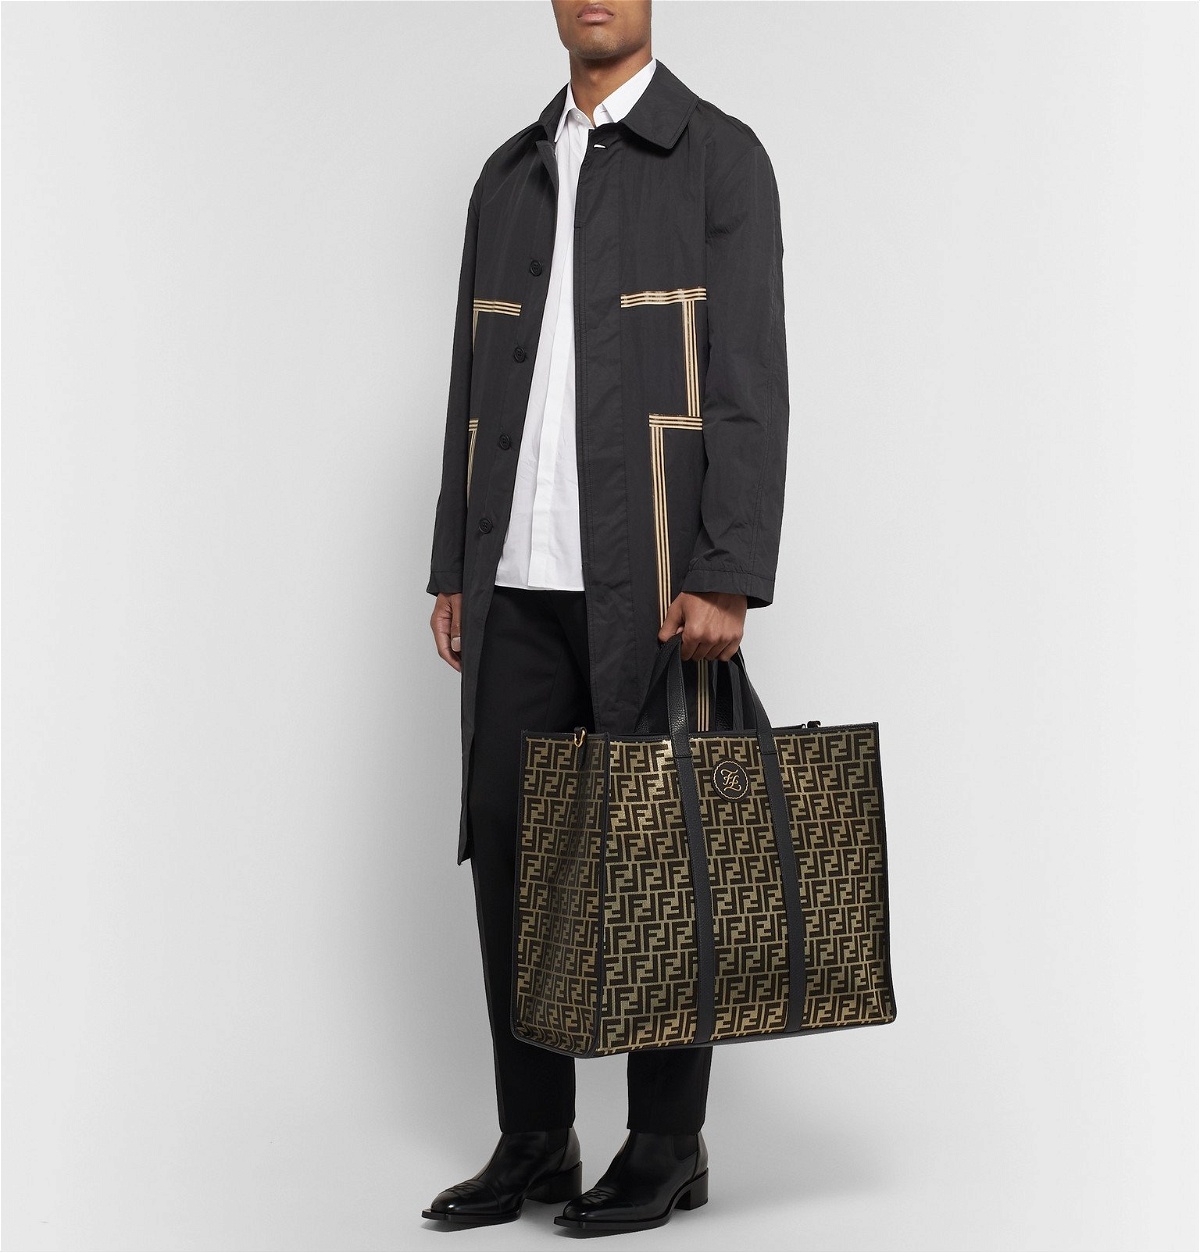 Fendi - Leather-Trimmed Logo-Jacquard Canvas Tote Bag - Brown Fendi